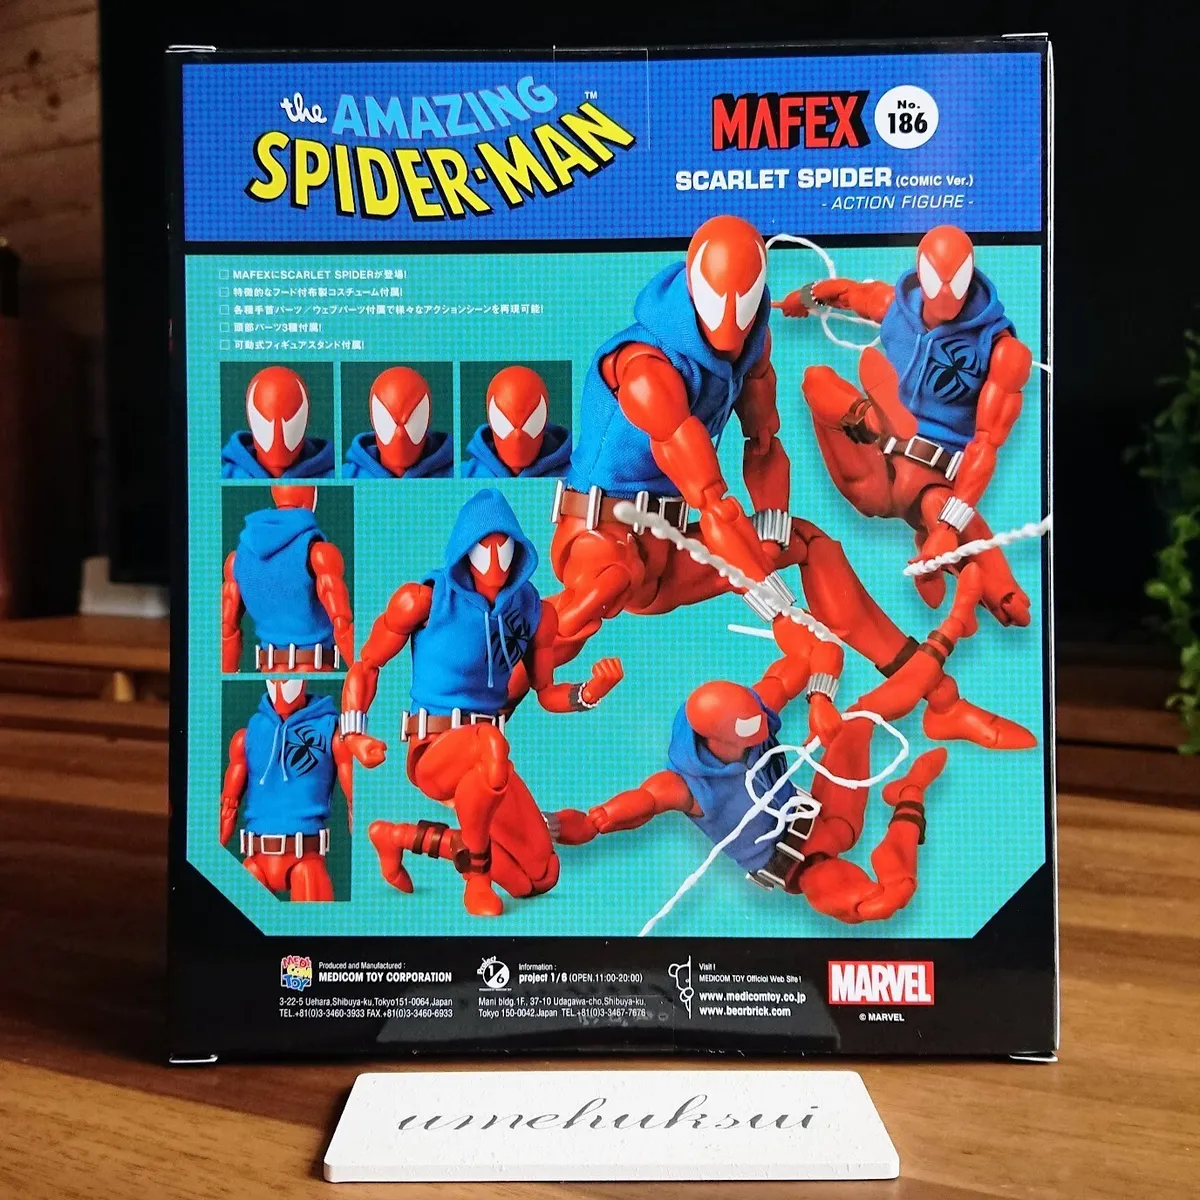 MEDICOM TOY MAFEX No.186 SCARLET SPIDER COMIC Ver. SPIDER-MAN